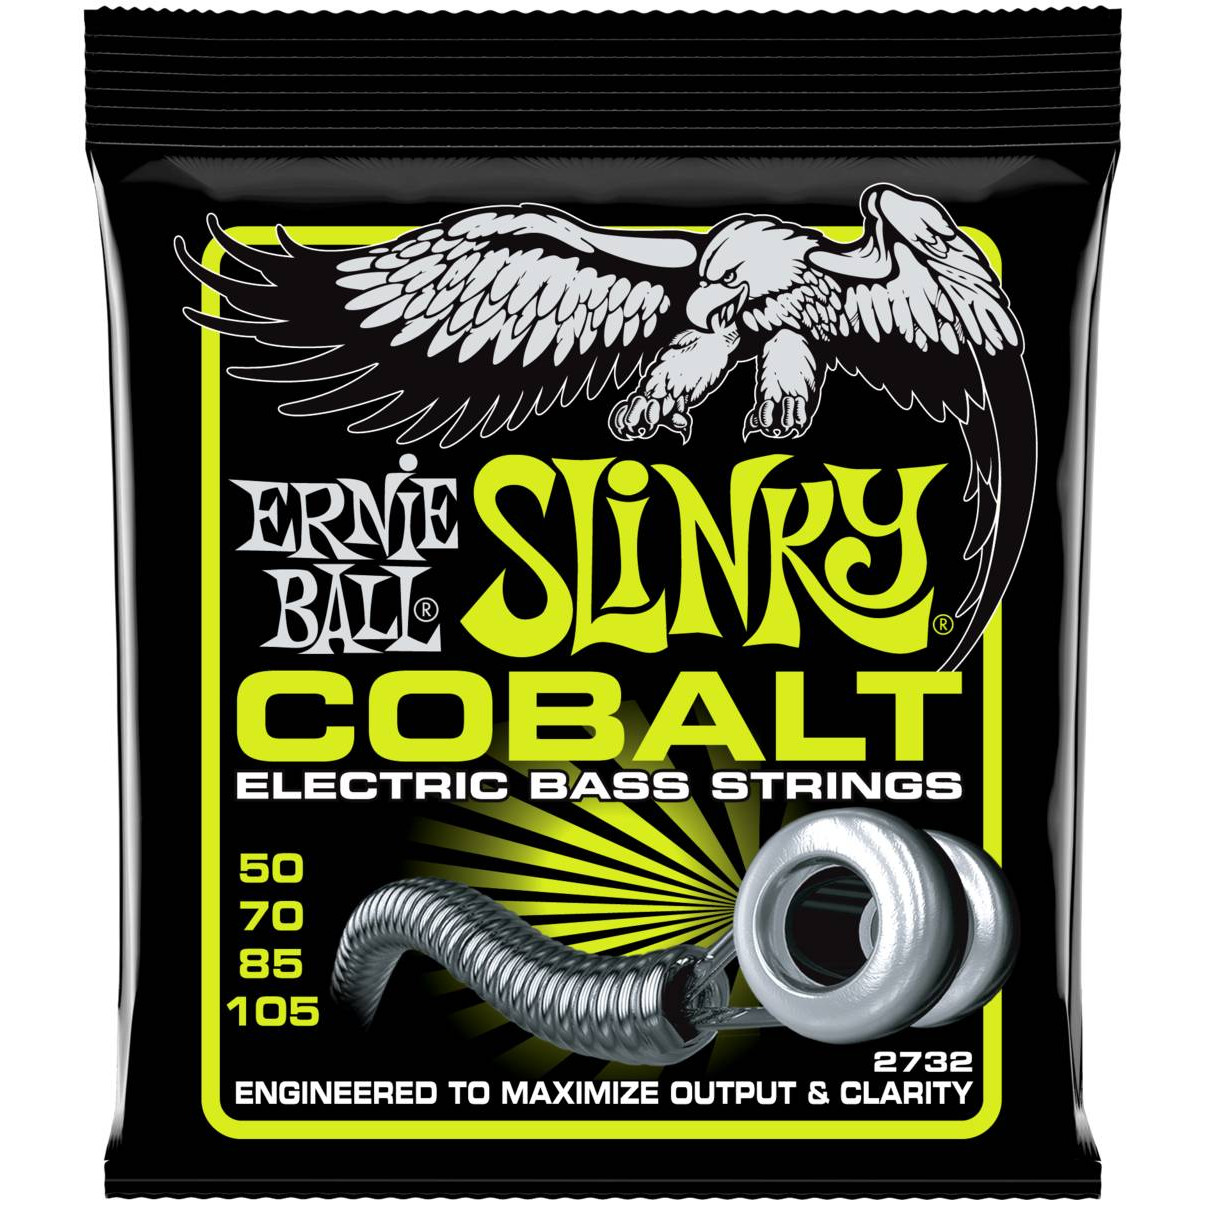 Струны Ernie Ball 2732 Slinky Cobalt Regular струны ernie ball 3833 coated bass hybrid slinky